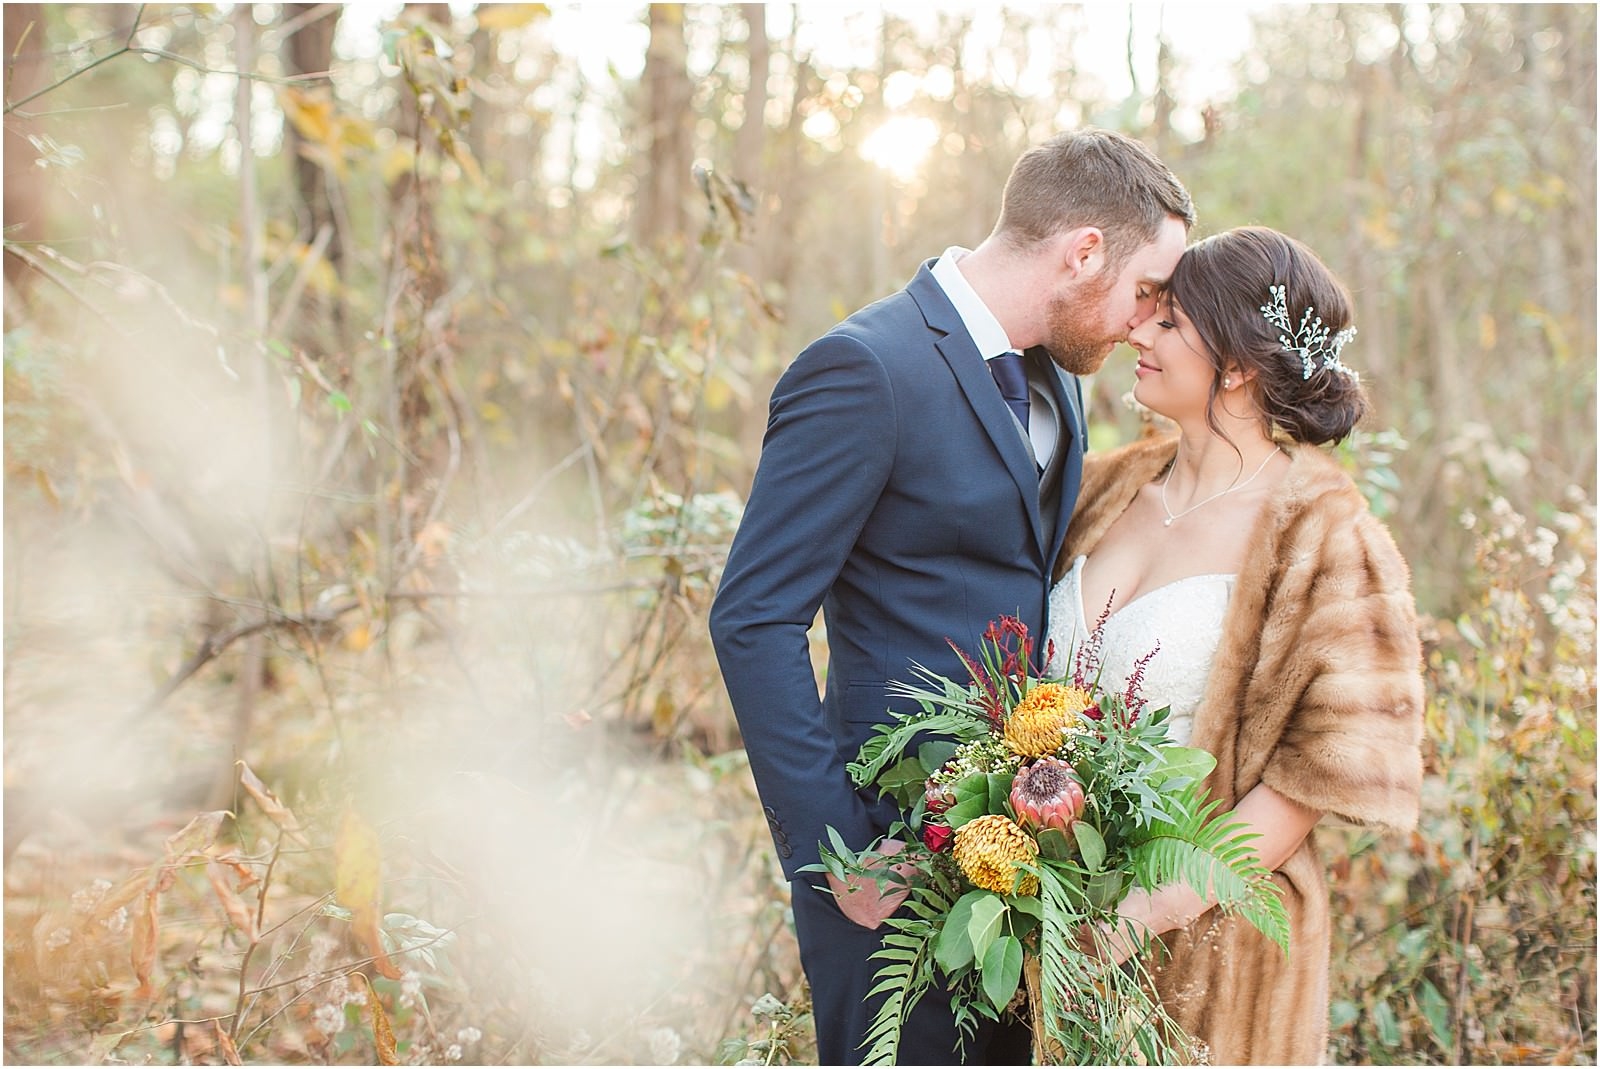 Walker and Alyssa's intimate fall wedding in Southern Indiana. | Wedding Photography | The Corner House Wedding | Southern Indiana Wedding | #fallwedding #intimatewedding | 080.jpg